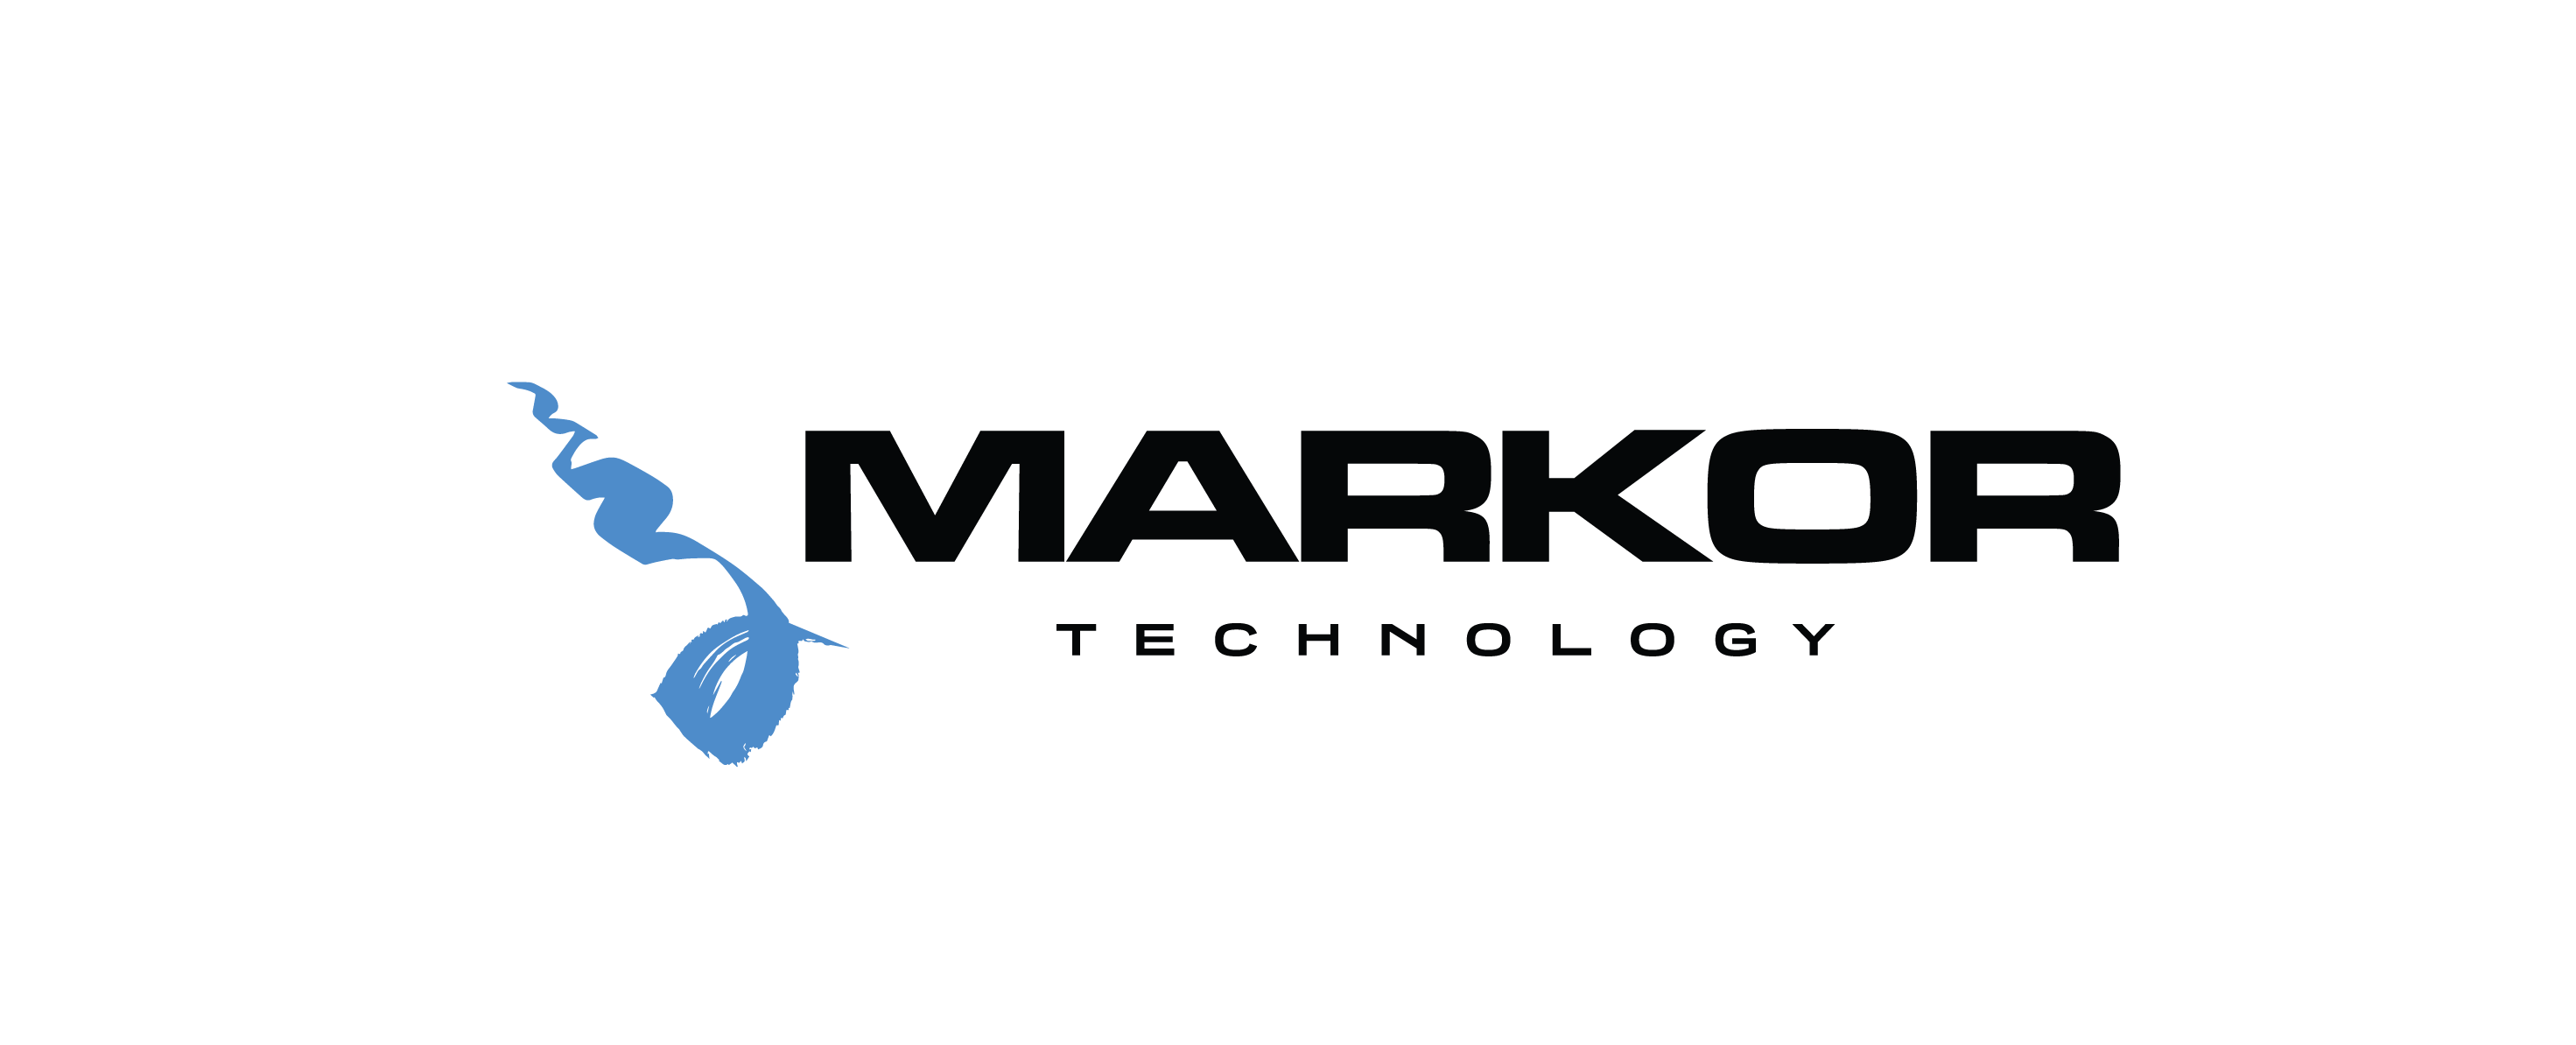 Markor Technology permainan